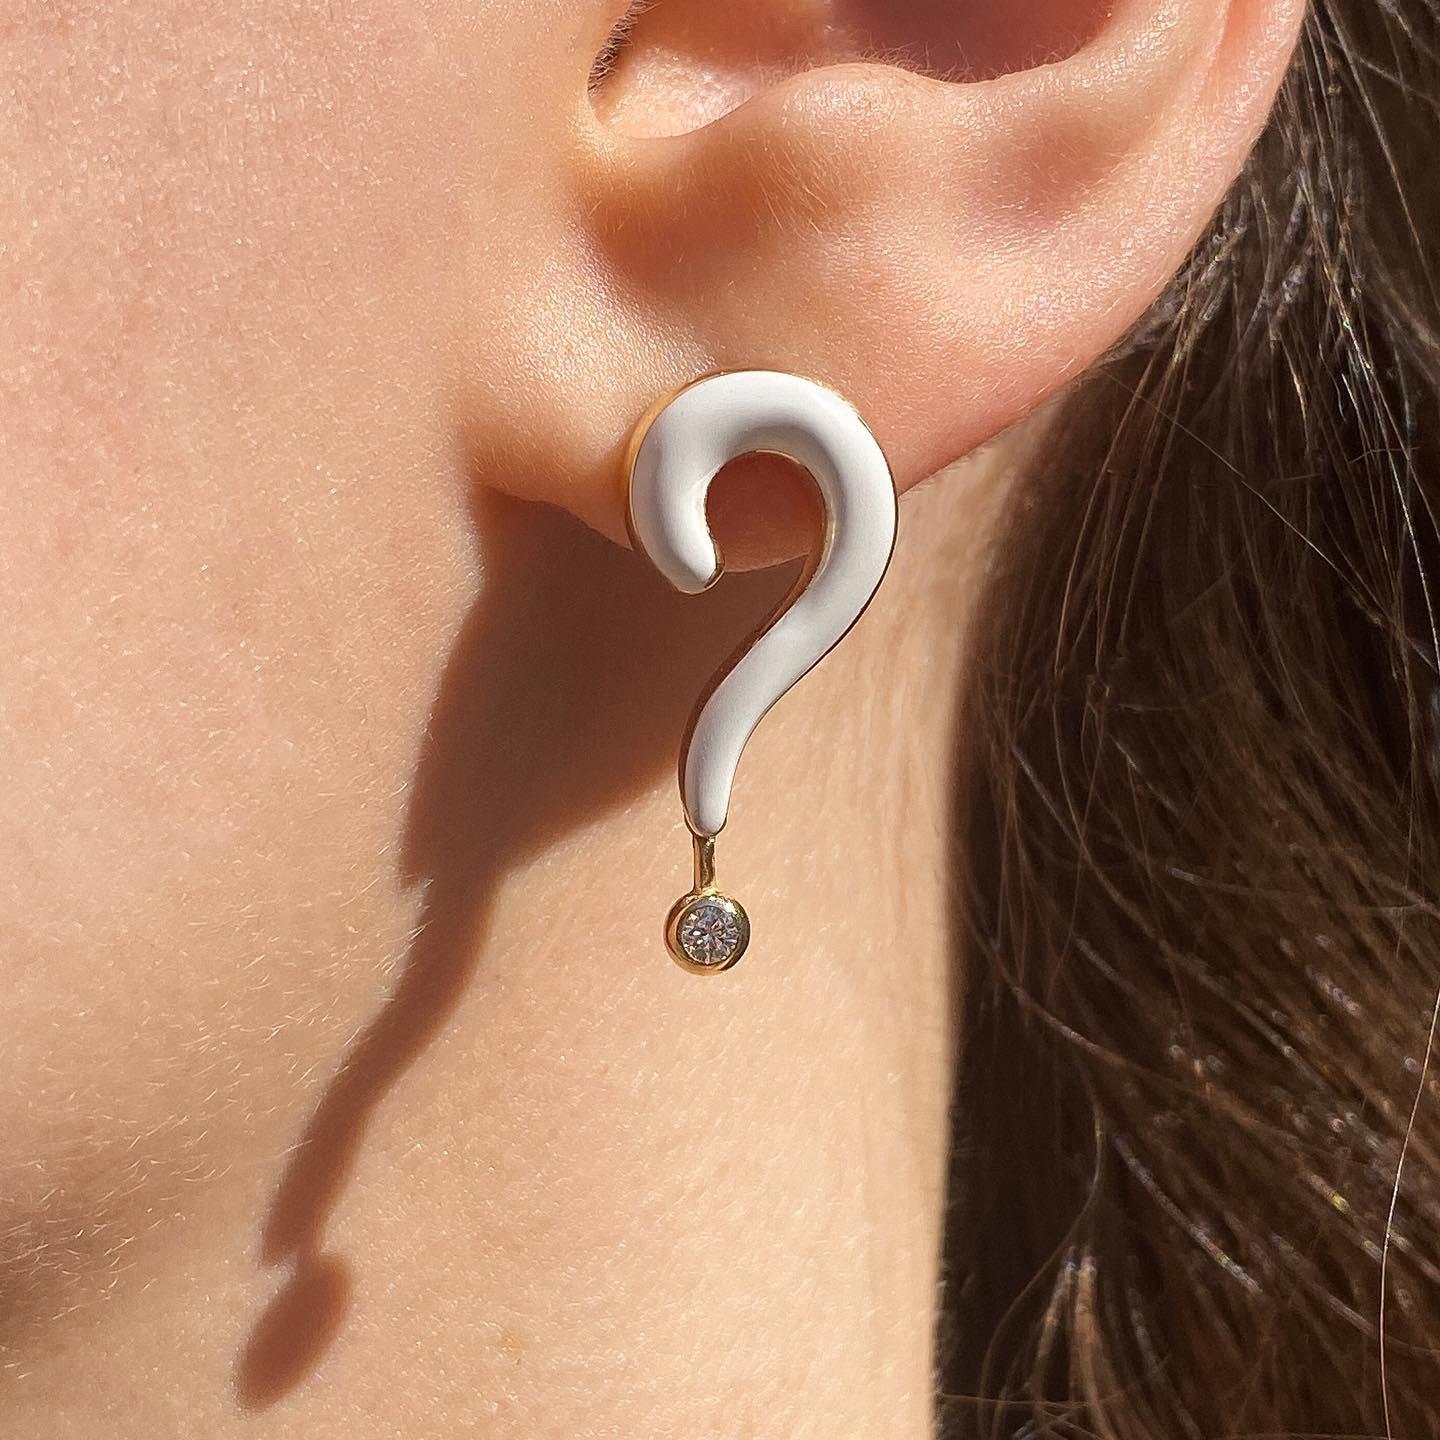 question mark ear